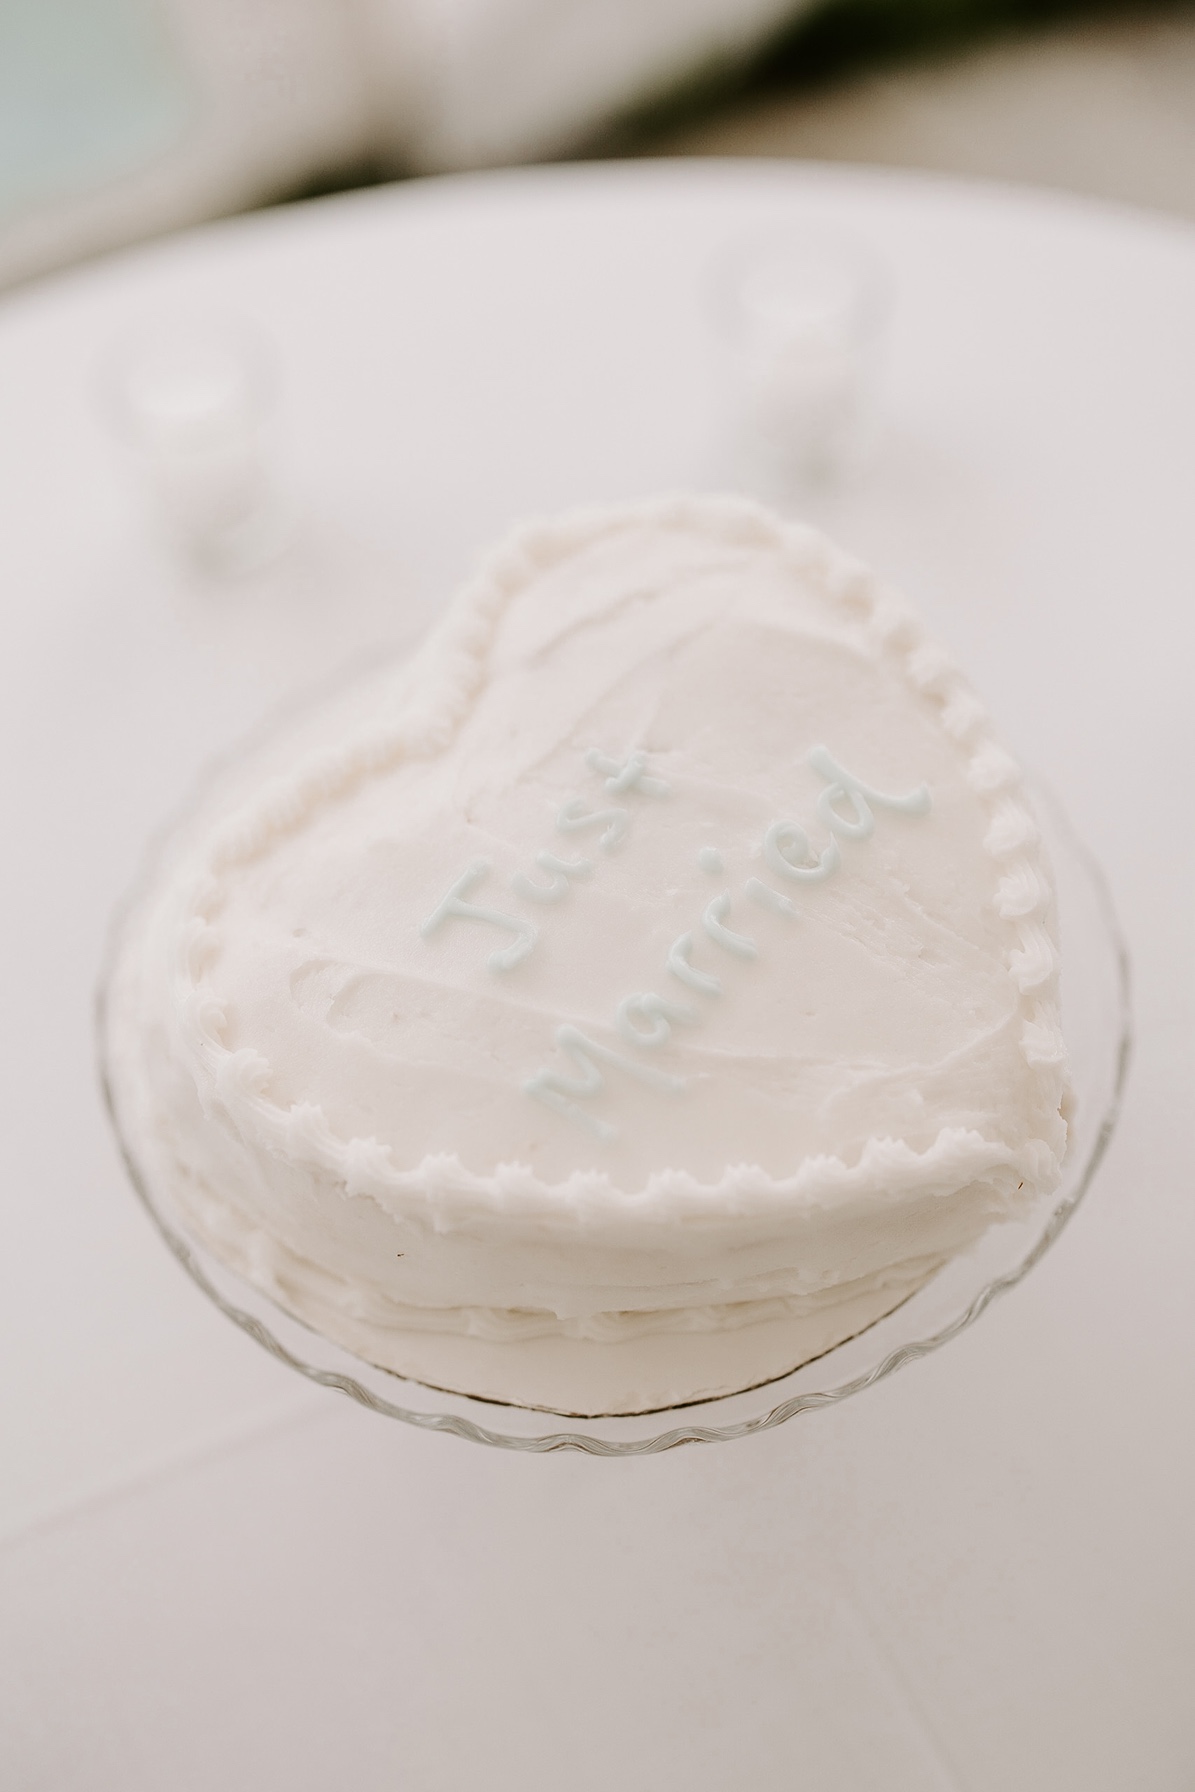 Homemade wedding cake for the Estate at Moraine Farm wedding reception